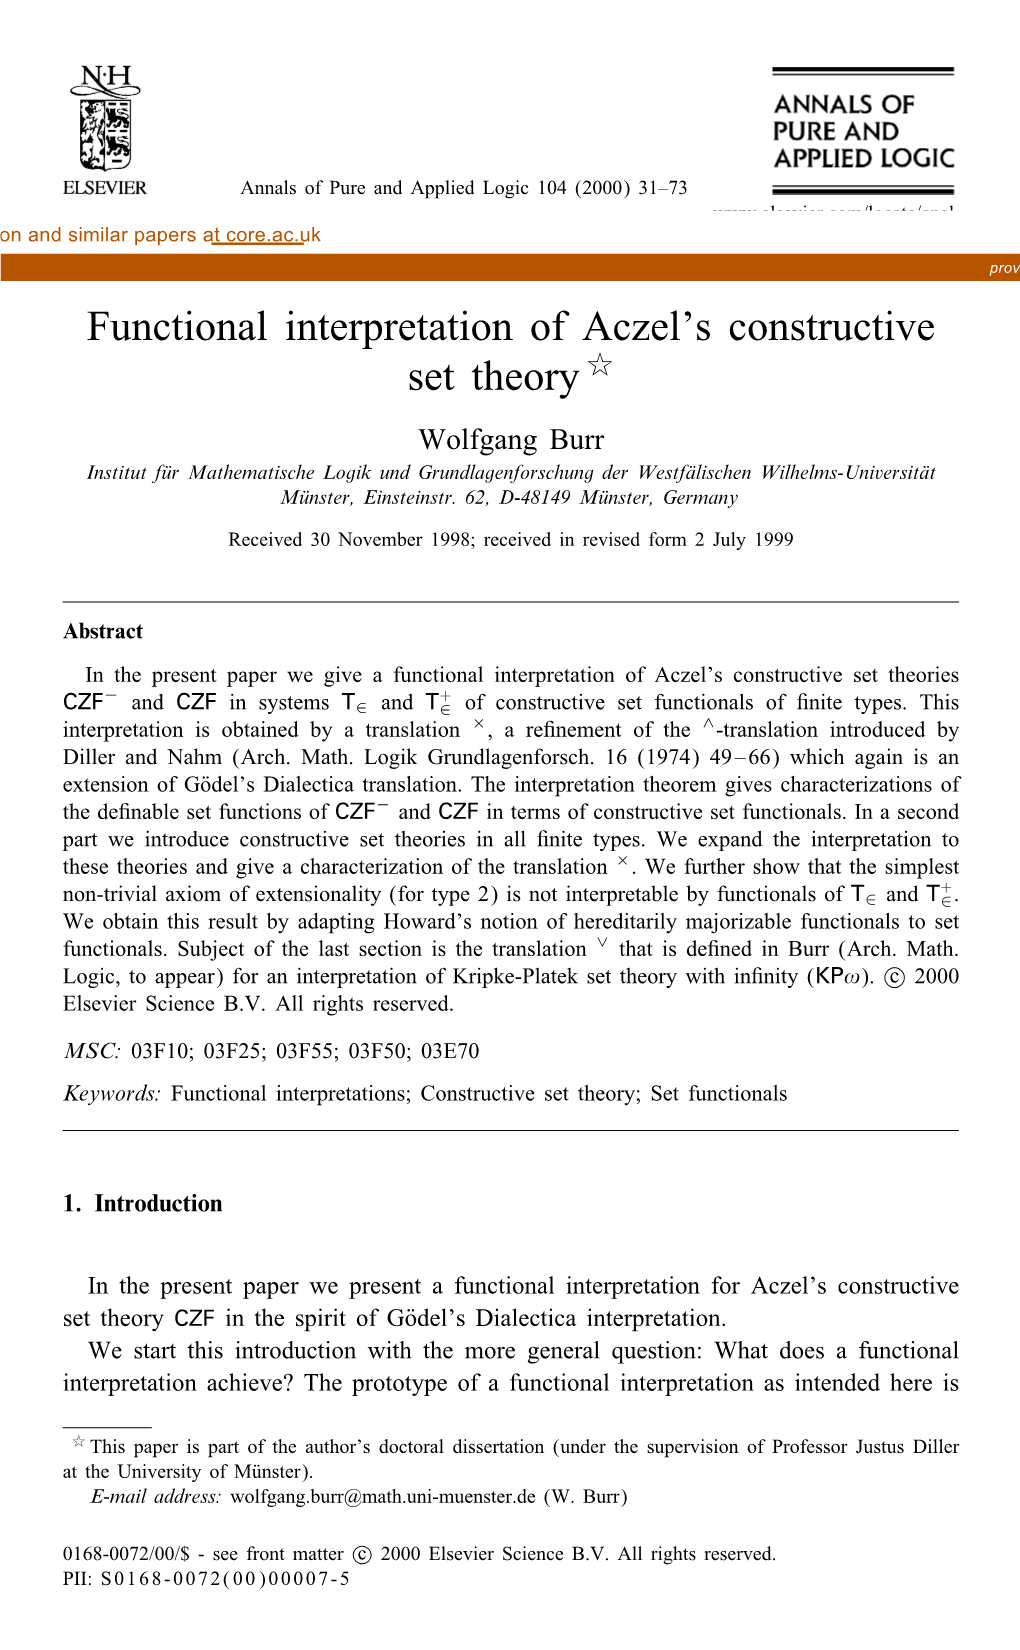 Functional Interpretation of Aczel's Constructive Set Theory